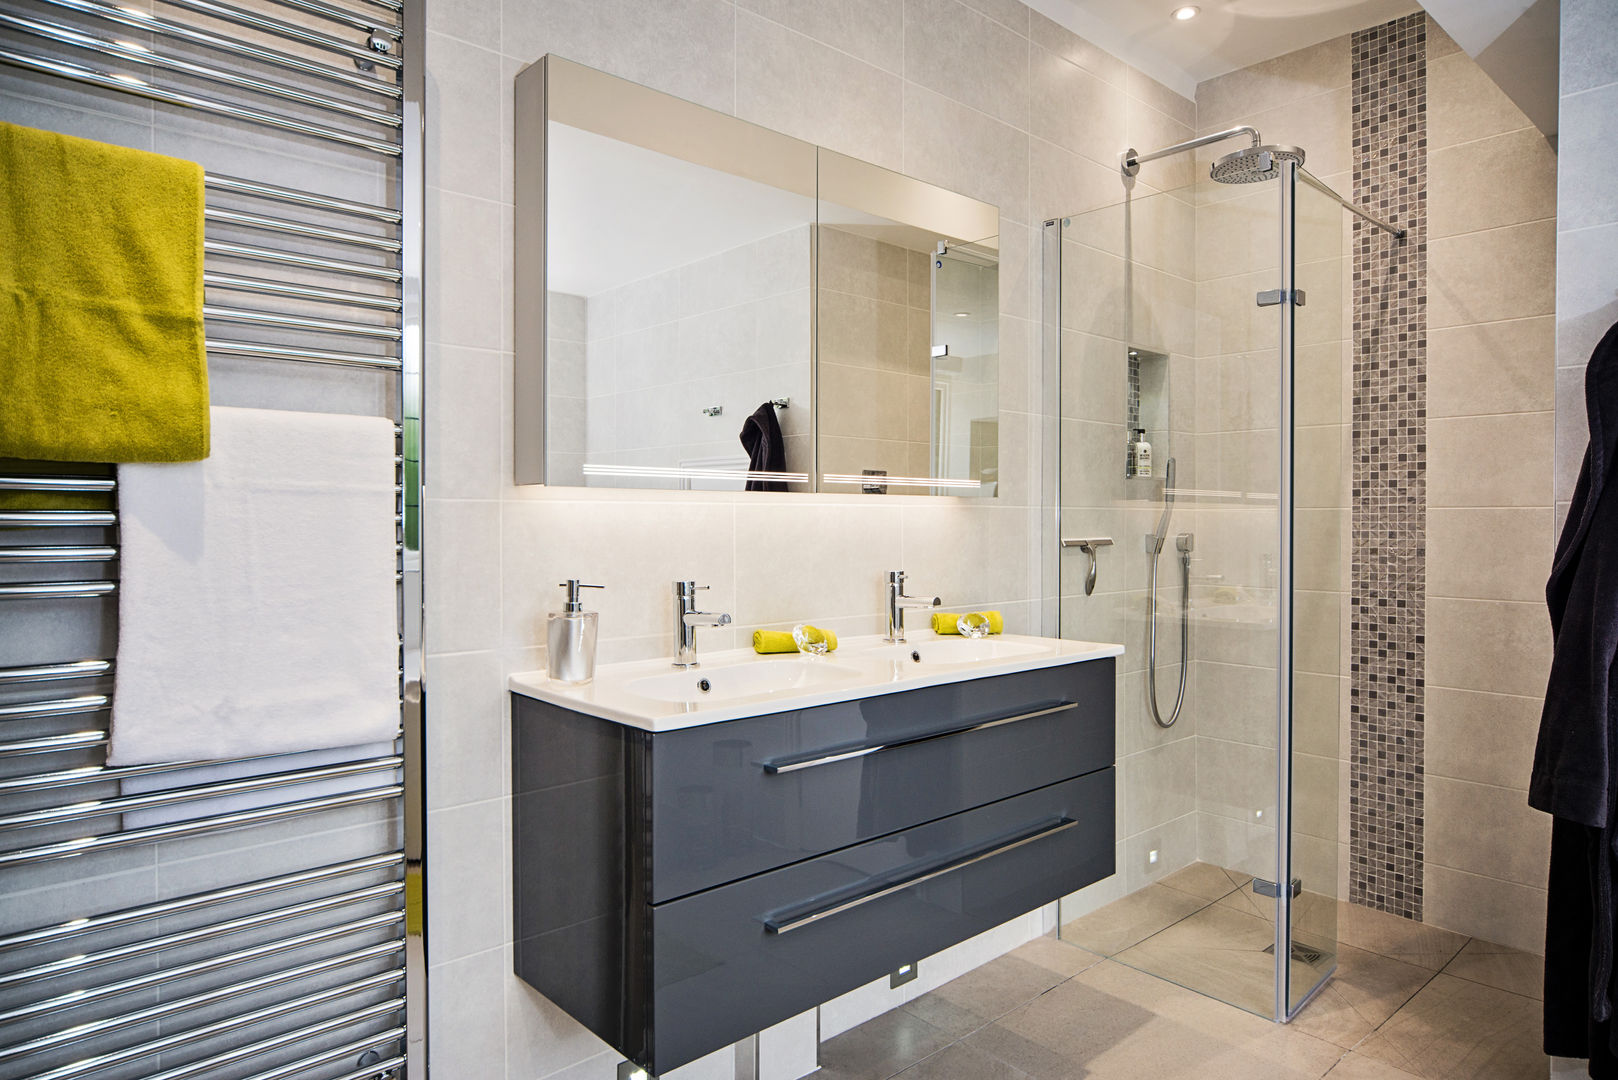 Mr & Mrs D, En-Suite, Guildford Raycross Interiors Phòng tắm phong cách hiện đại bathroom design,installation,mosaic tiles,walk-in shower,free-standing bath,mirror cabinet